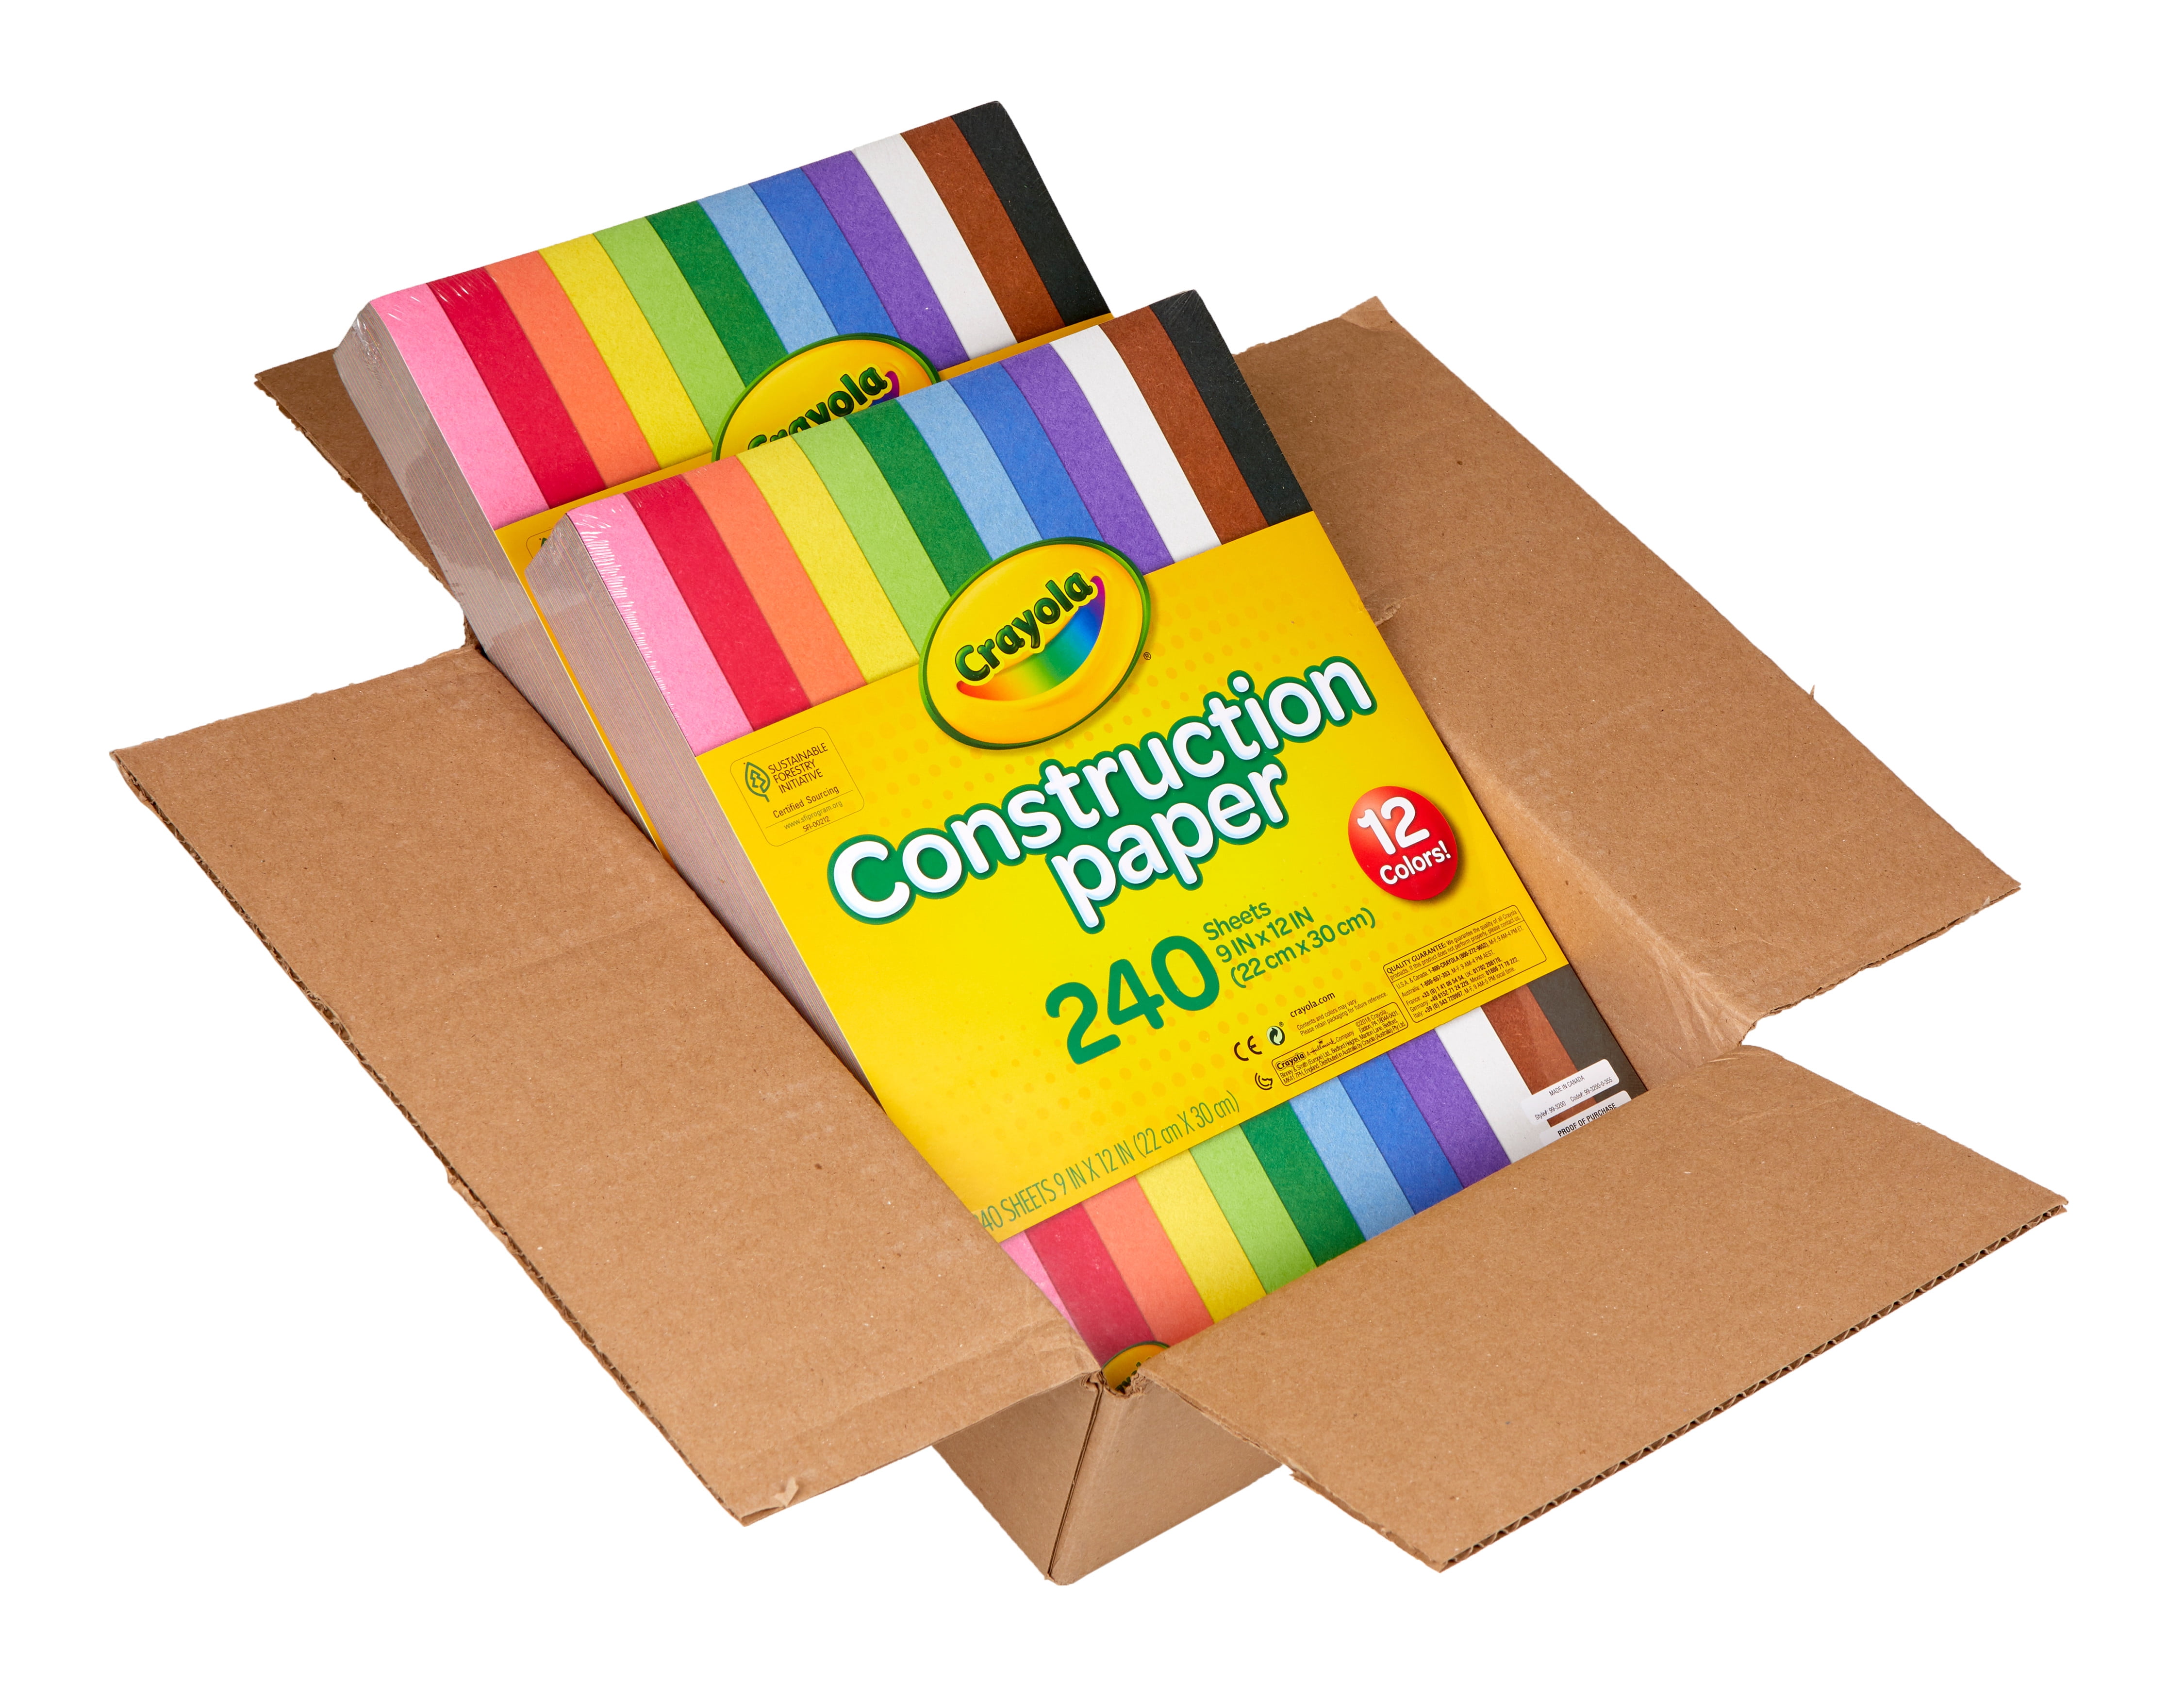 Crayola 240-sheet Construction Paper 12-color : Target